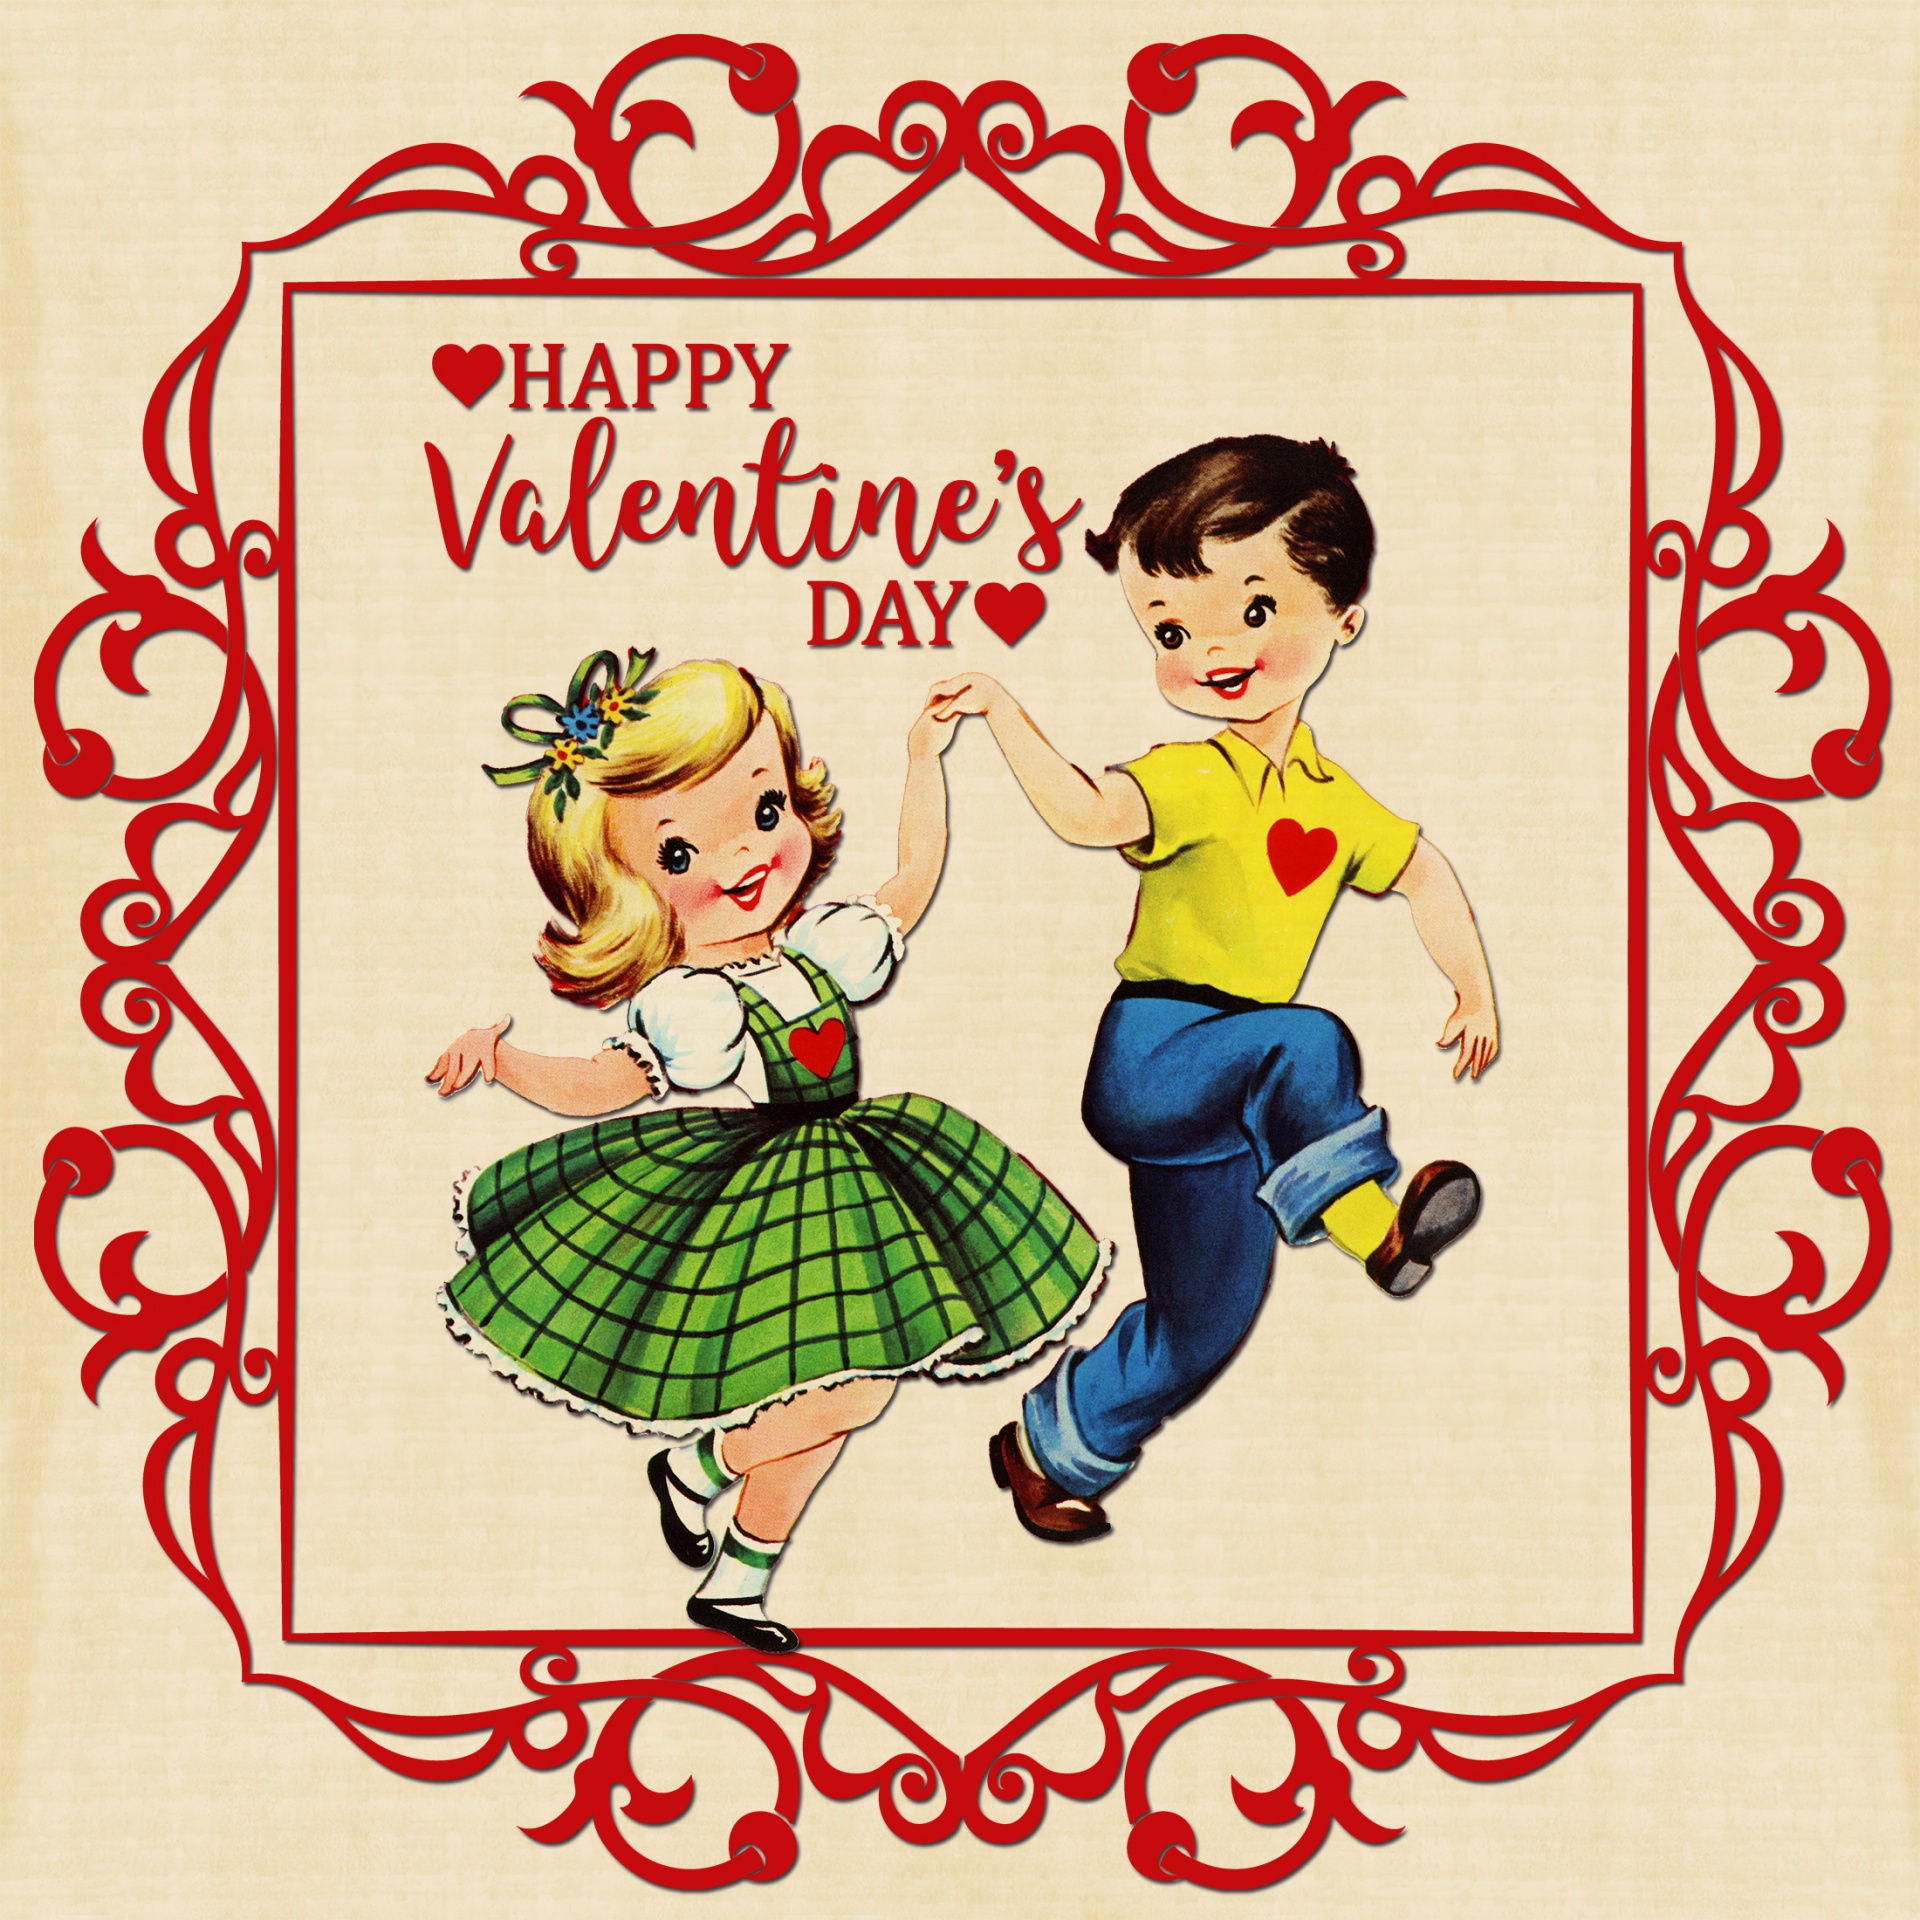 vintage valentines day images free download